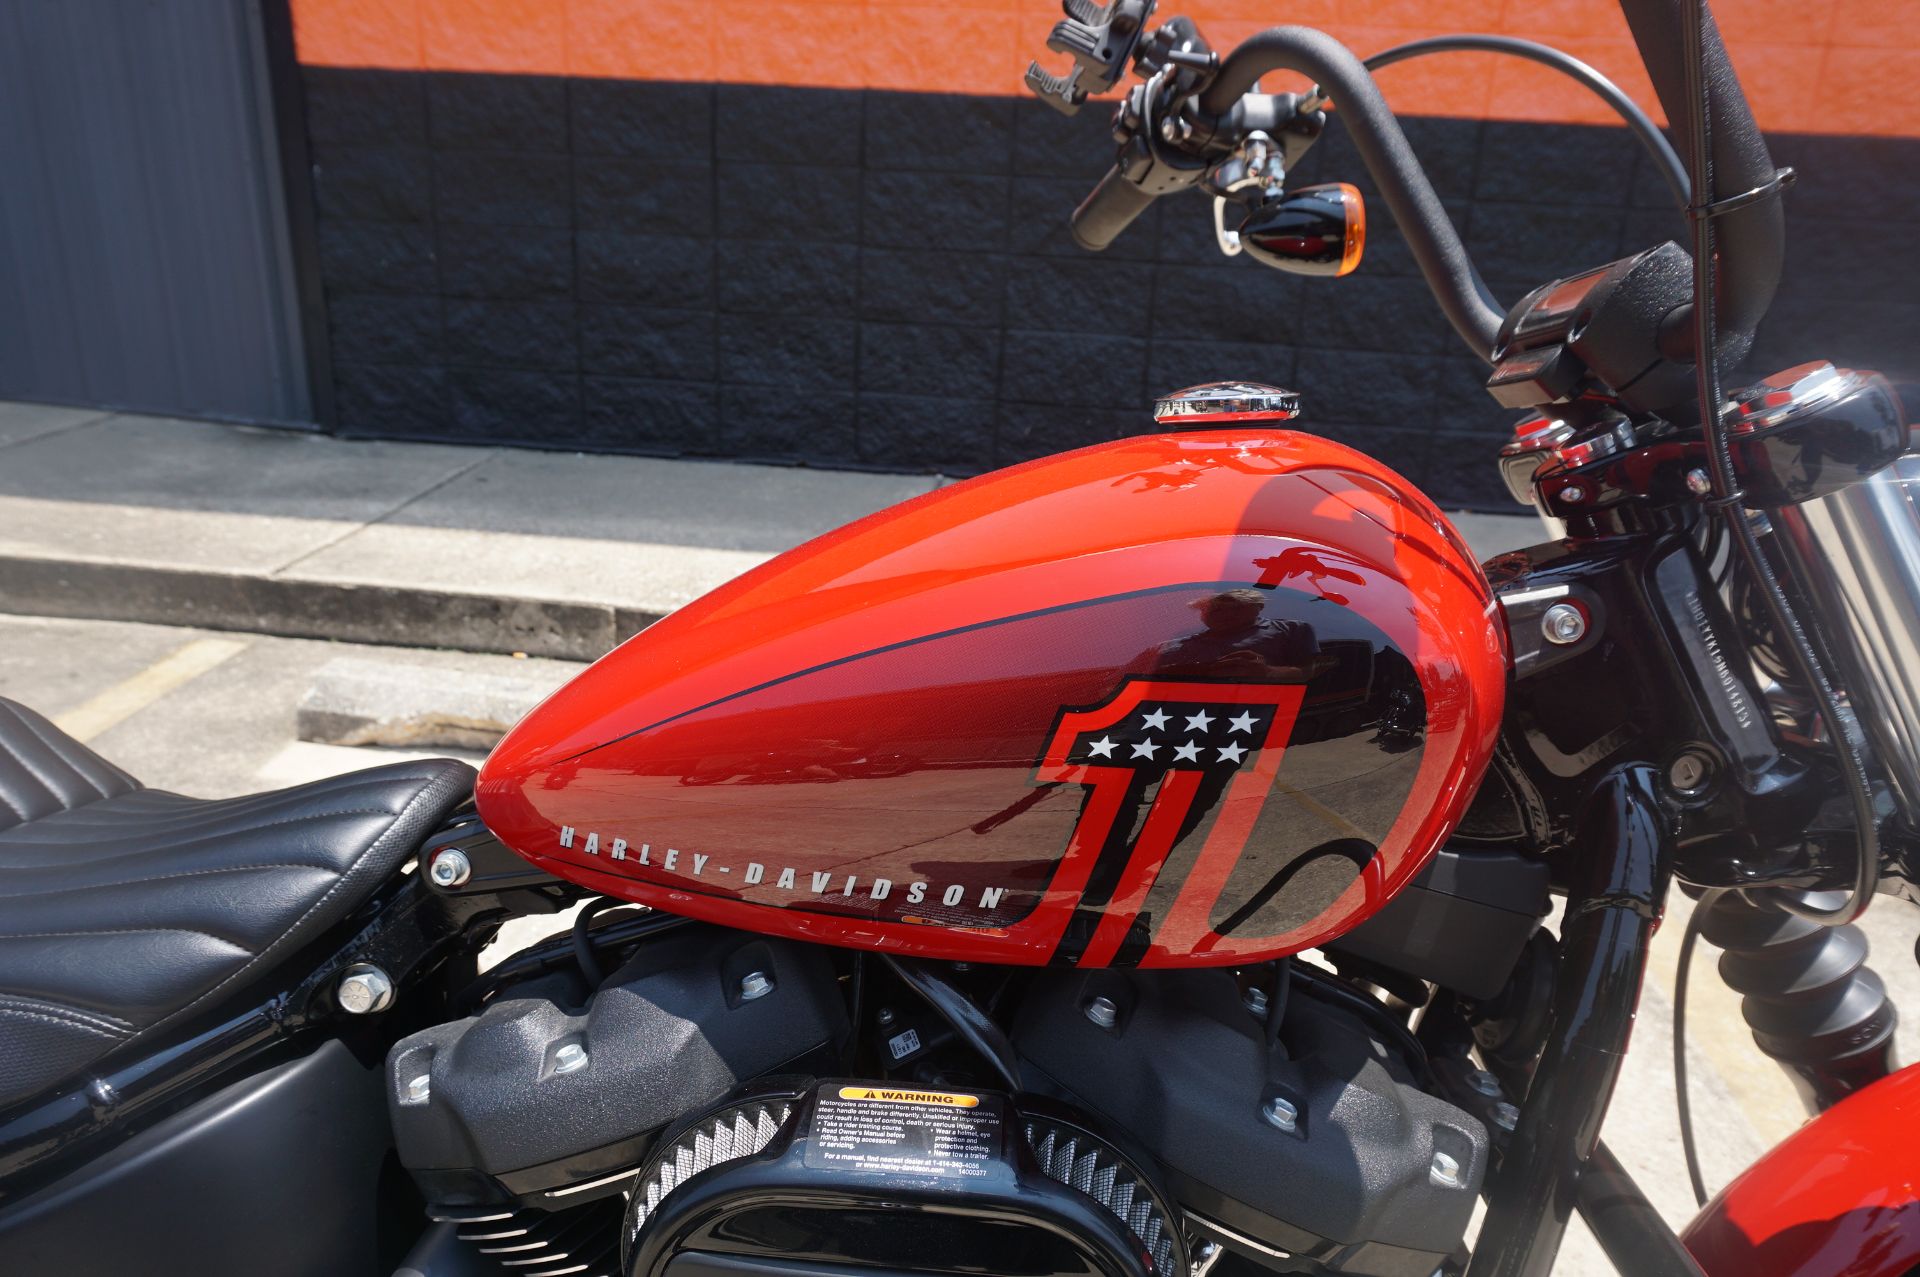 2022 Harley-Davidson Street Bob® 114 in Metairie, Louisiana - Photo 3